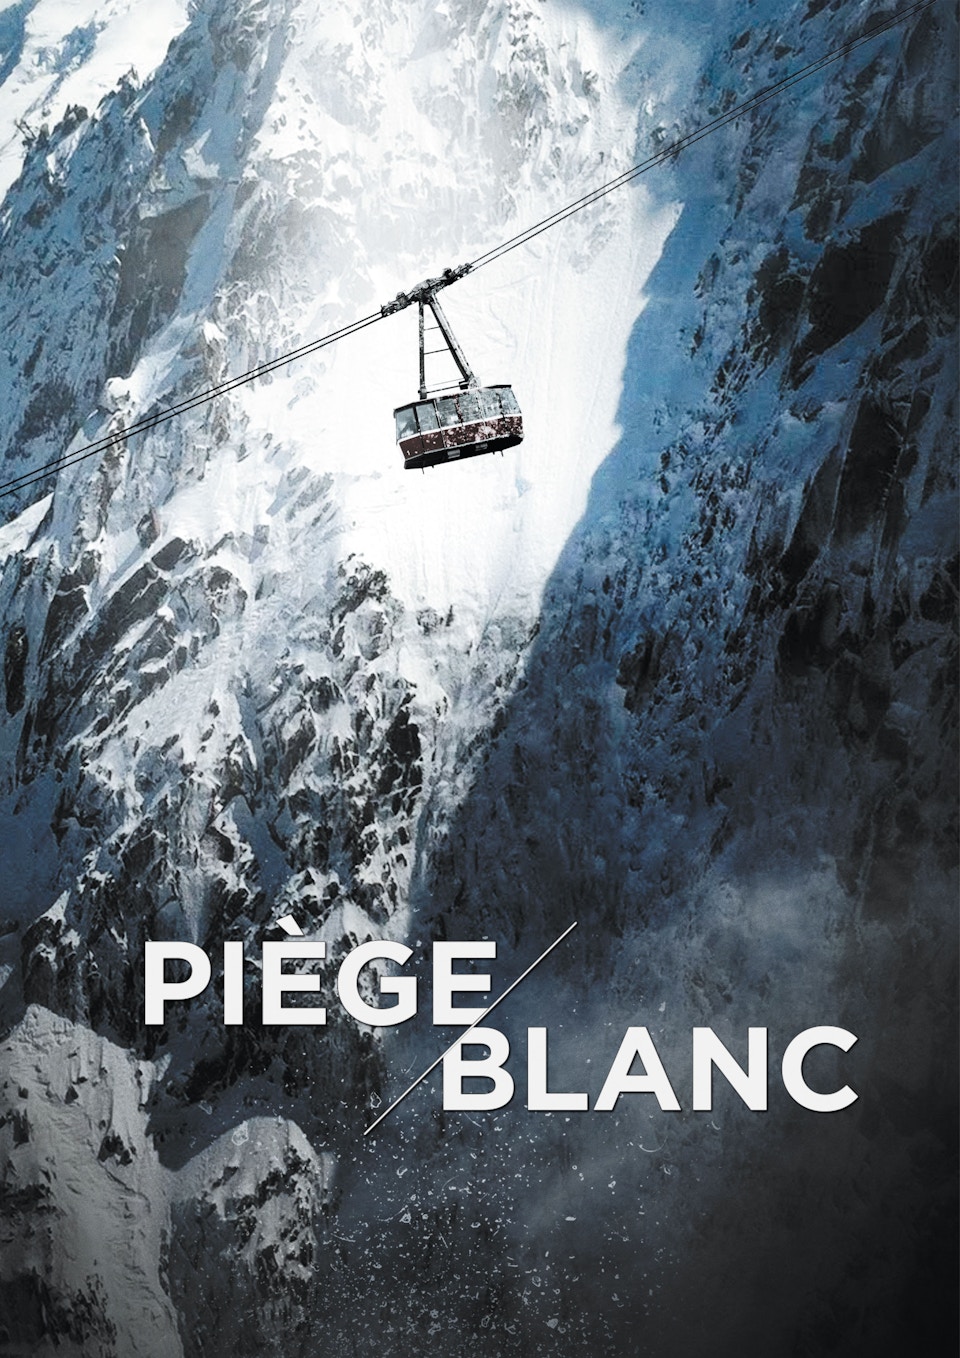 PIEGE BLANC - 2nd Unit